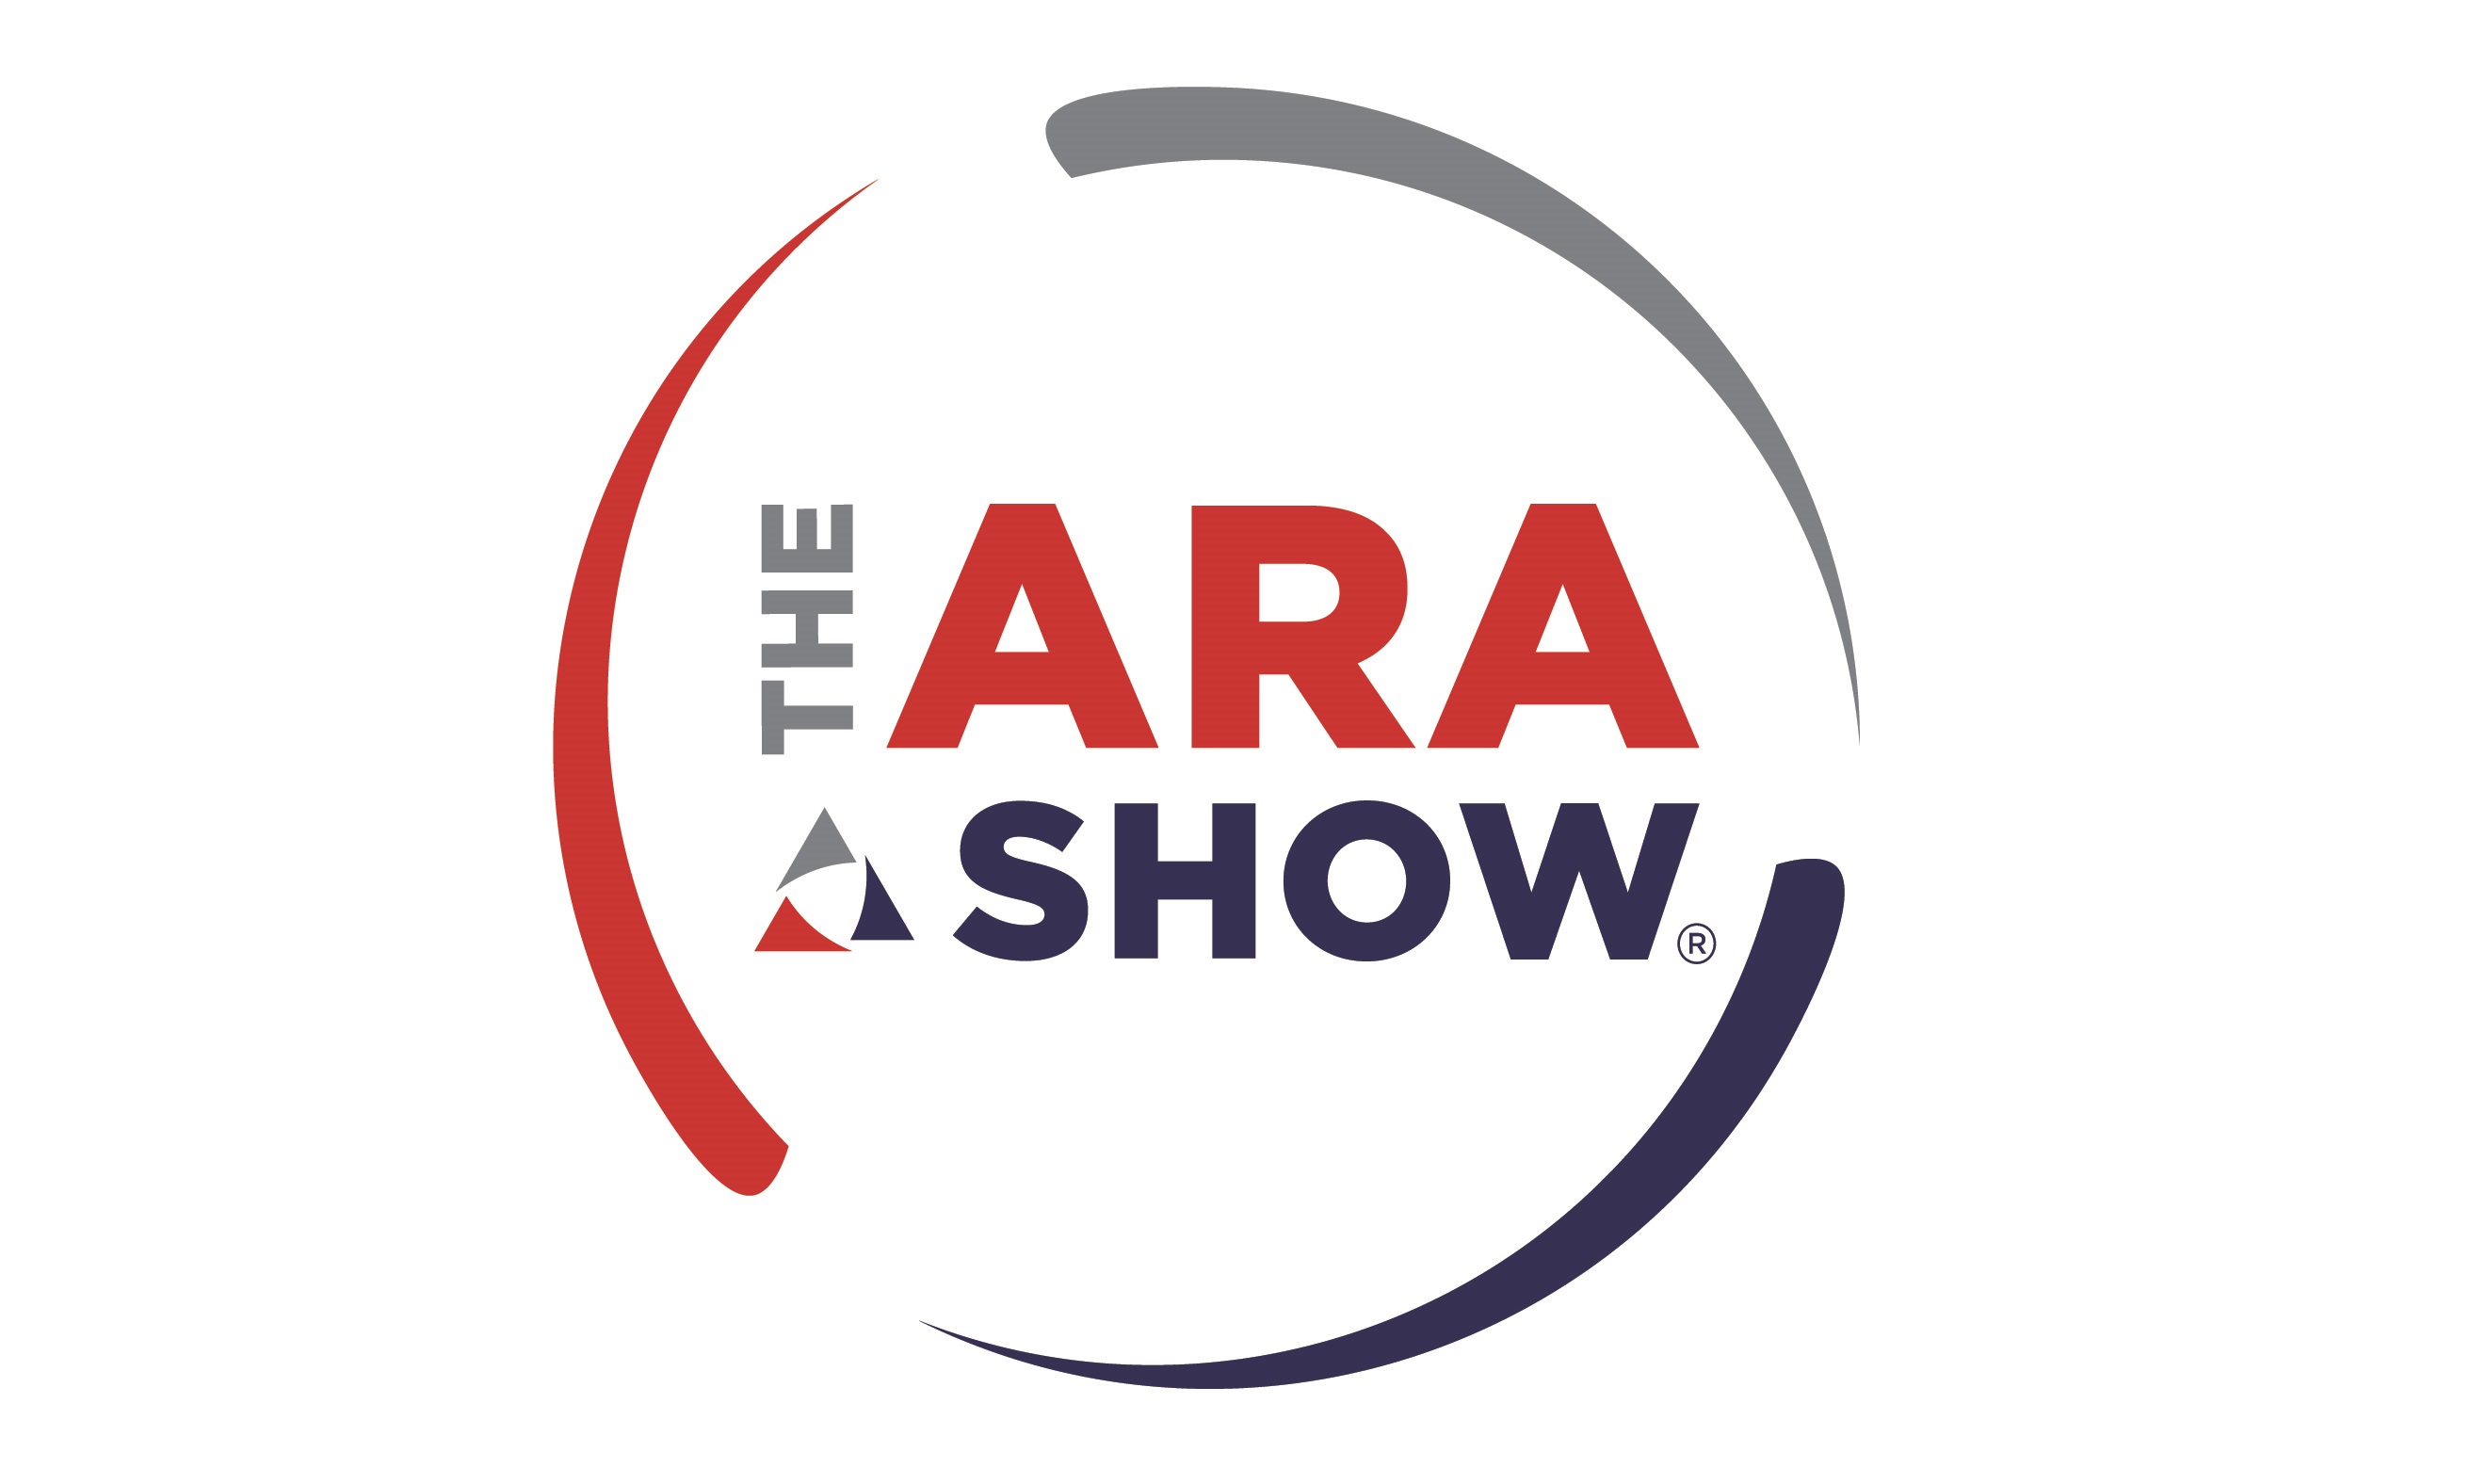 The ARA Show 2023 Returns to Orlando in February